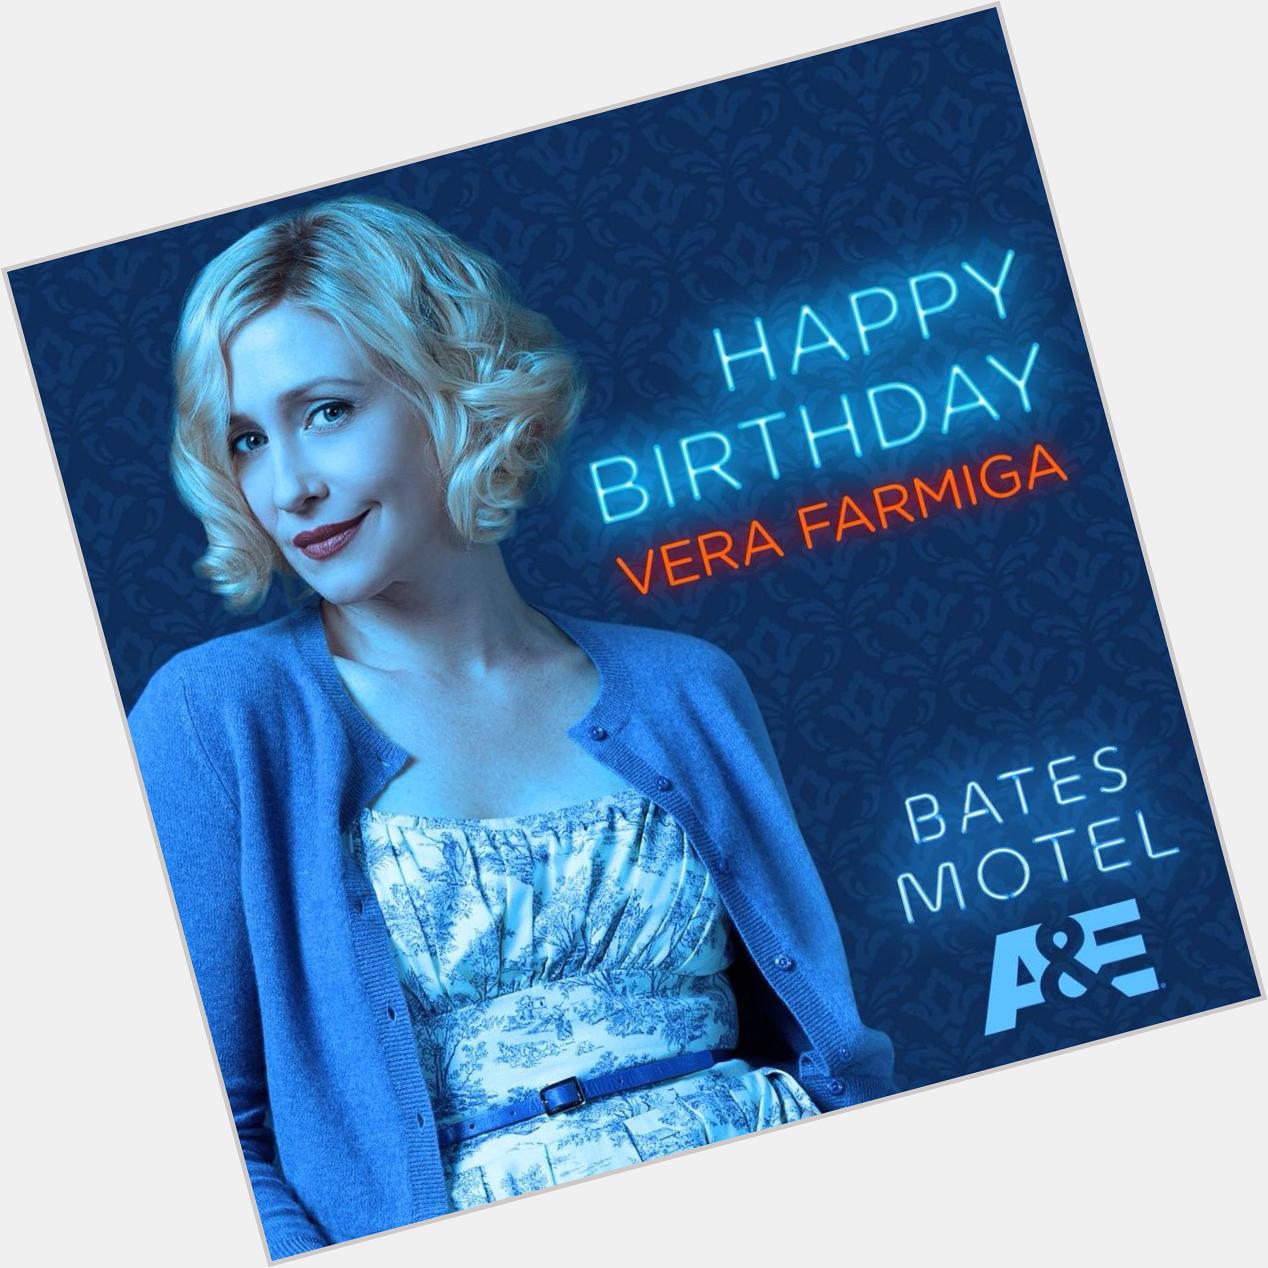 Happy Birthday, Vera Farmiga. 